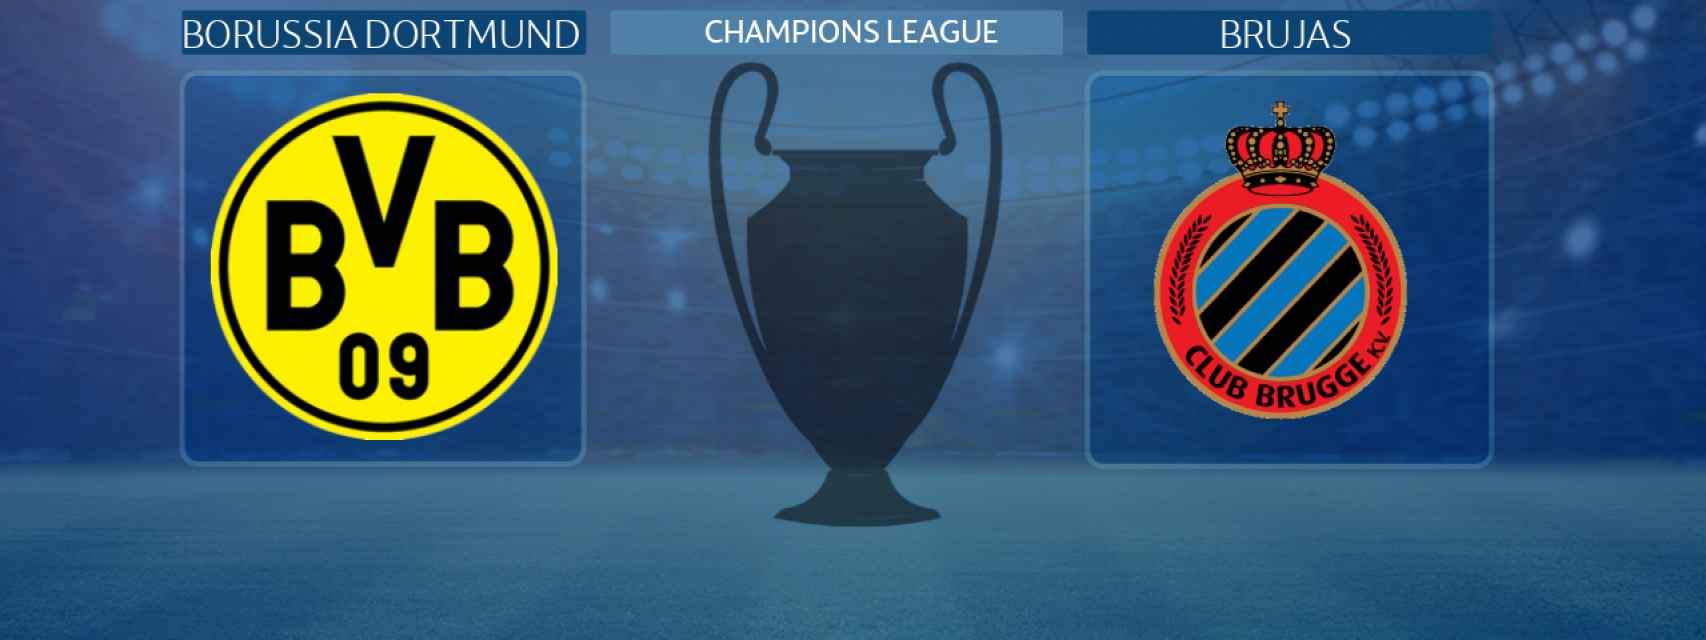 Borussia Dortmund - Brujas, partido de la Champions League